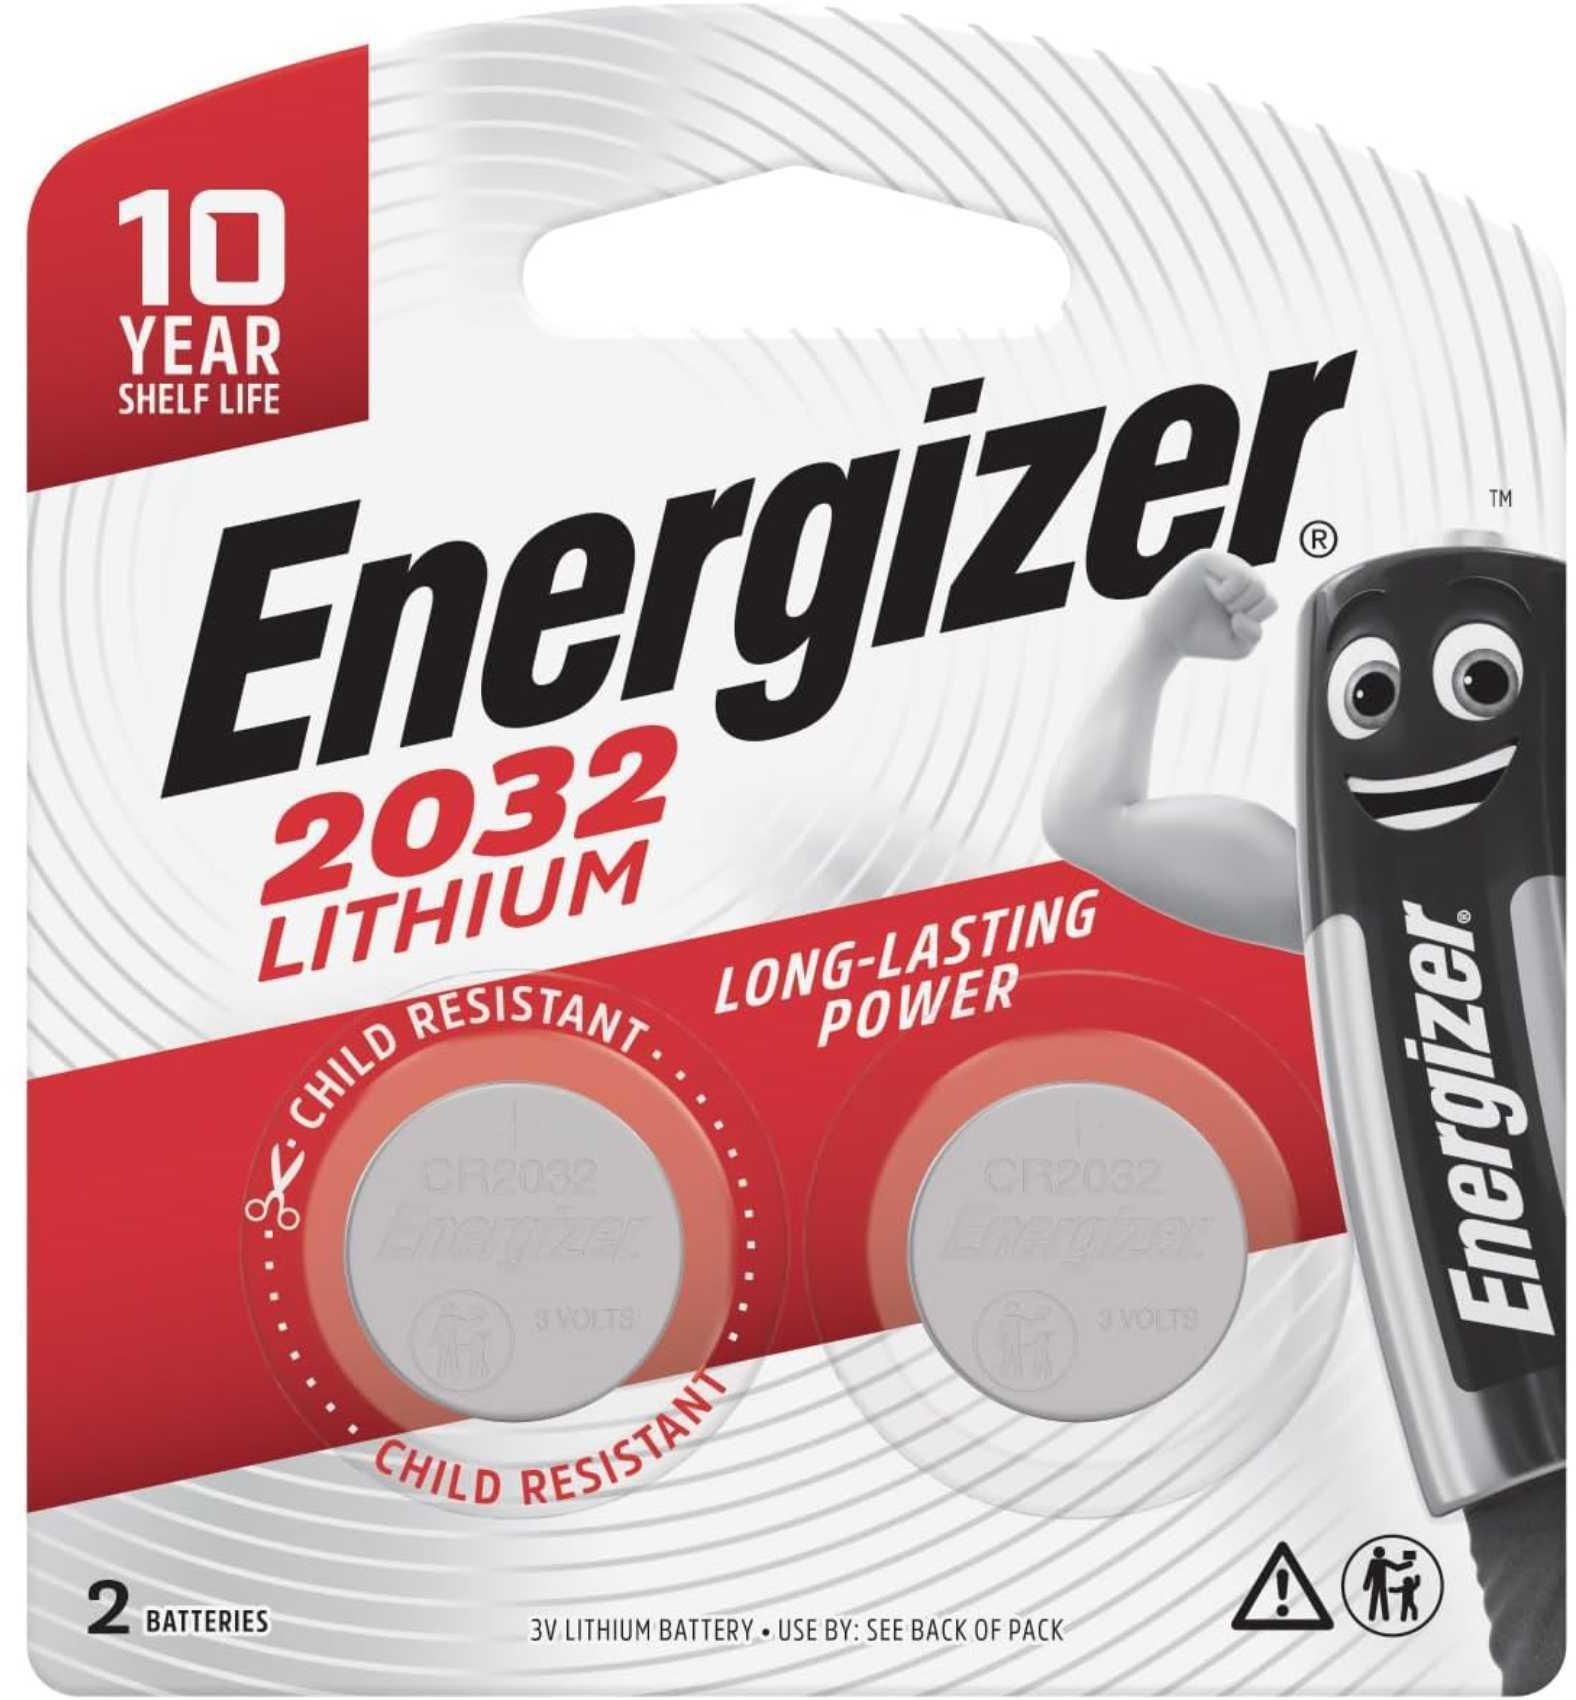 Energizer Lithium Batteries 3V (2032)  Pack of 2